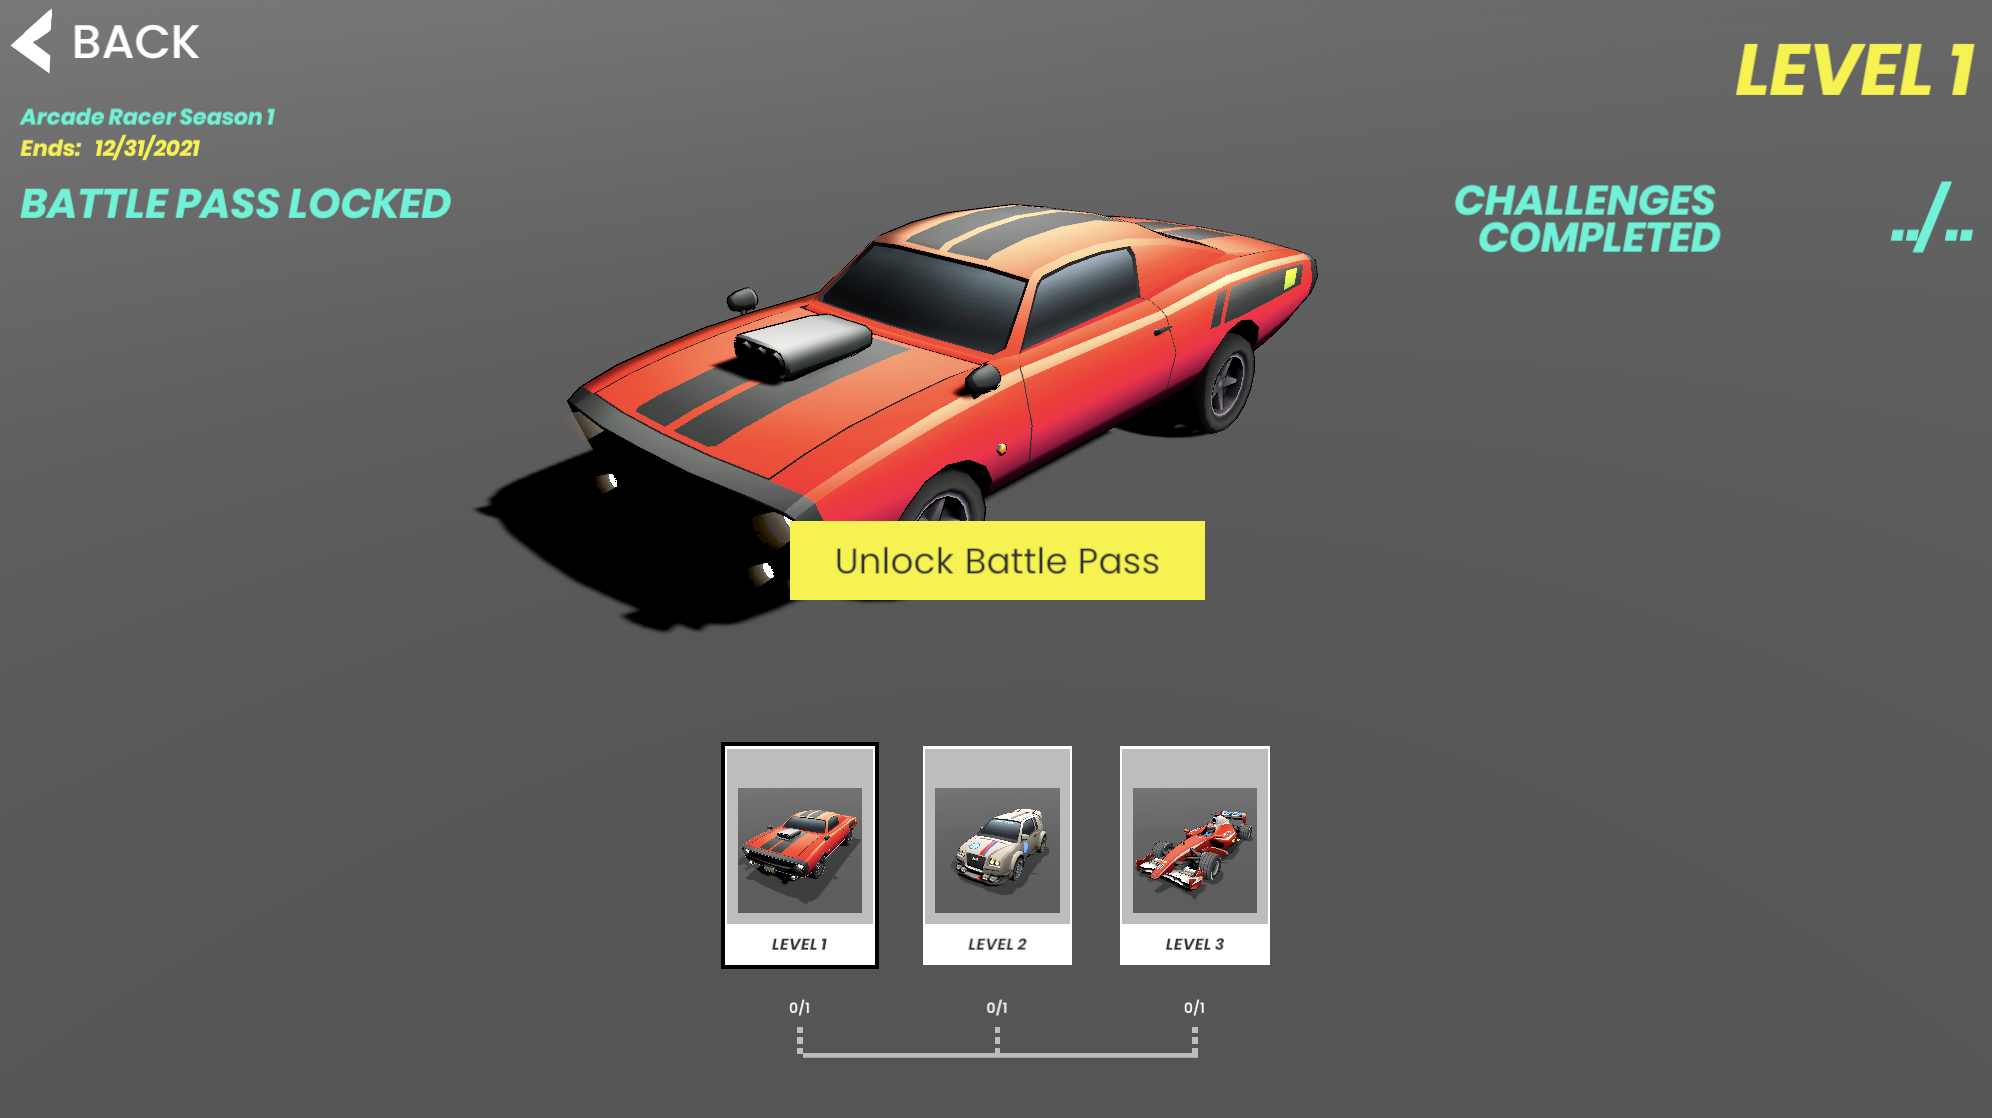 Battle Pass implementation of Arcade Racer